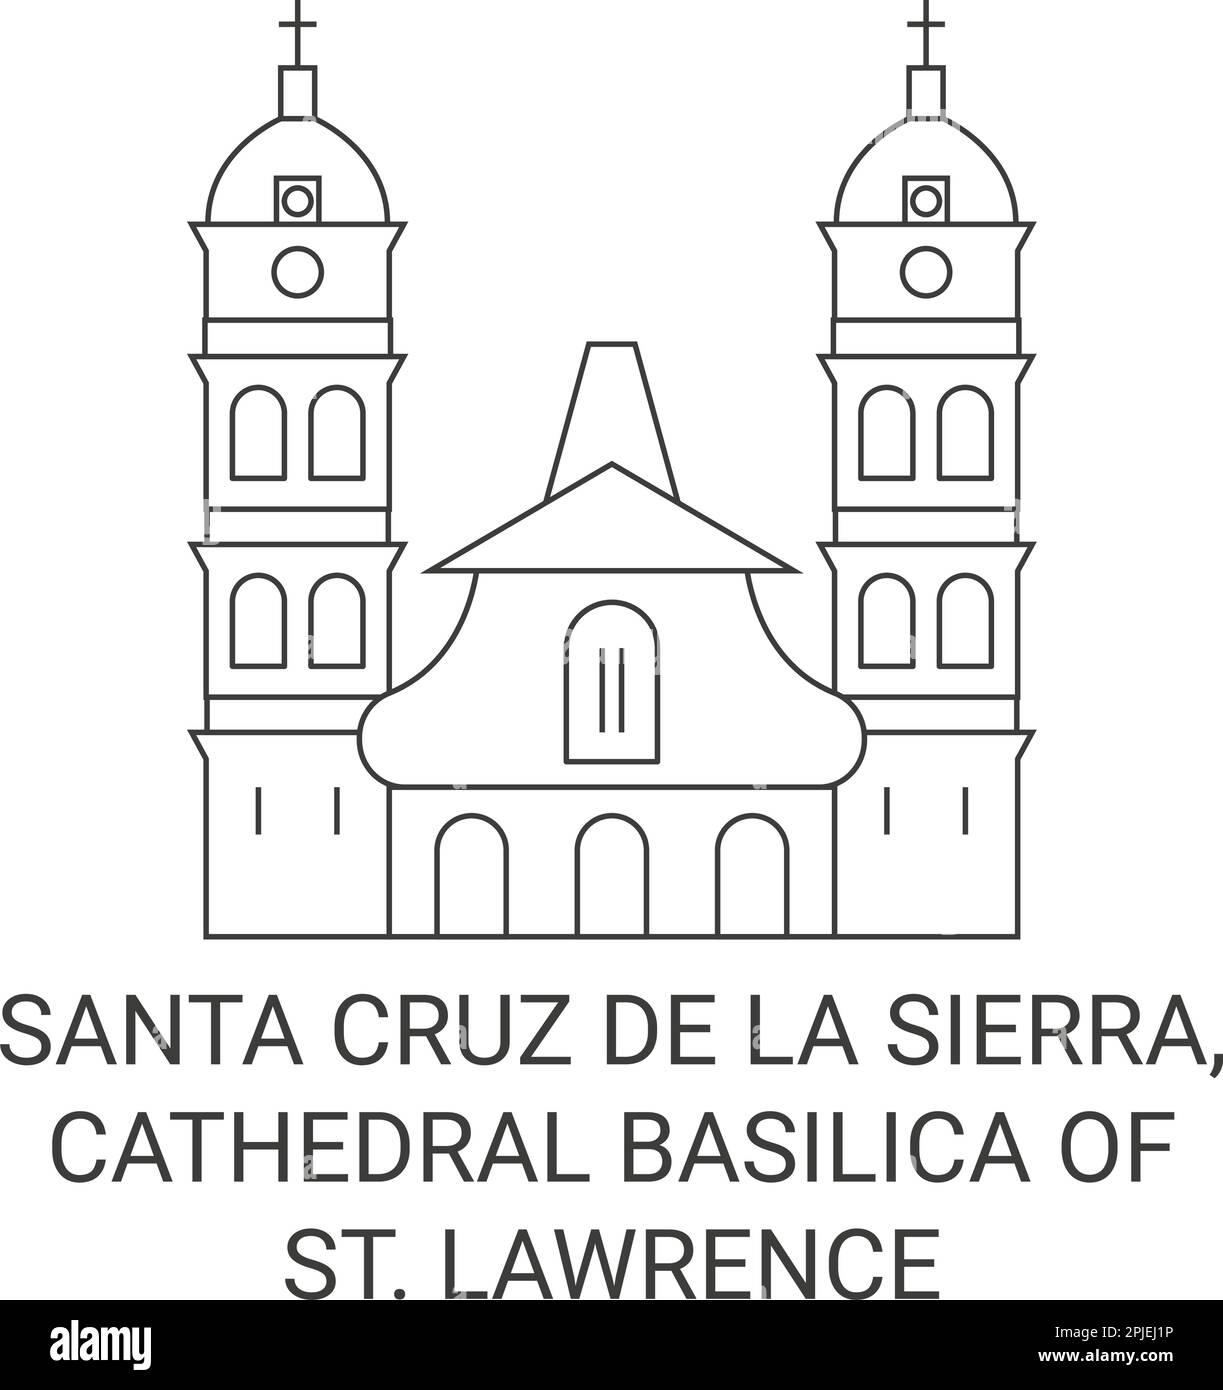 Bolivia, Santa Cruz De La Sierra, Cathedral Basilica Of St. Lawrence travel landmark vector illustration Stock Vector